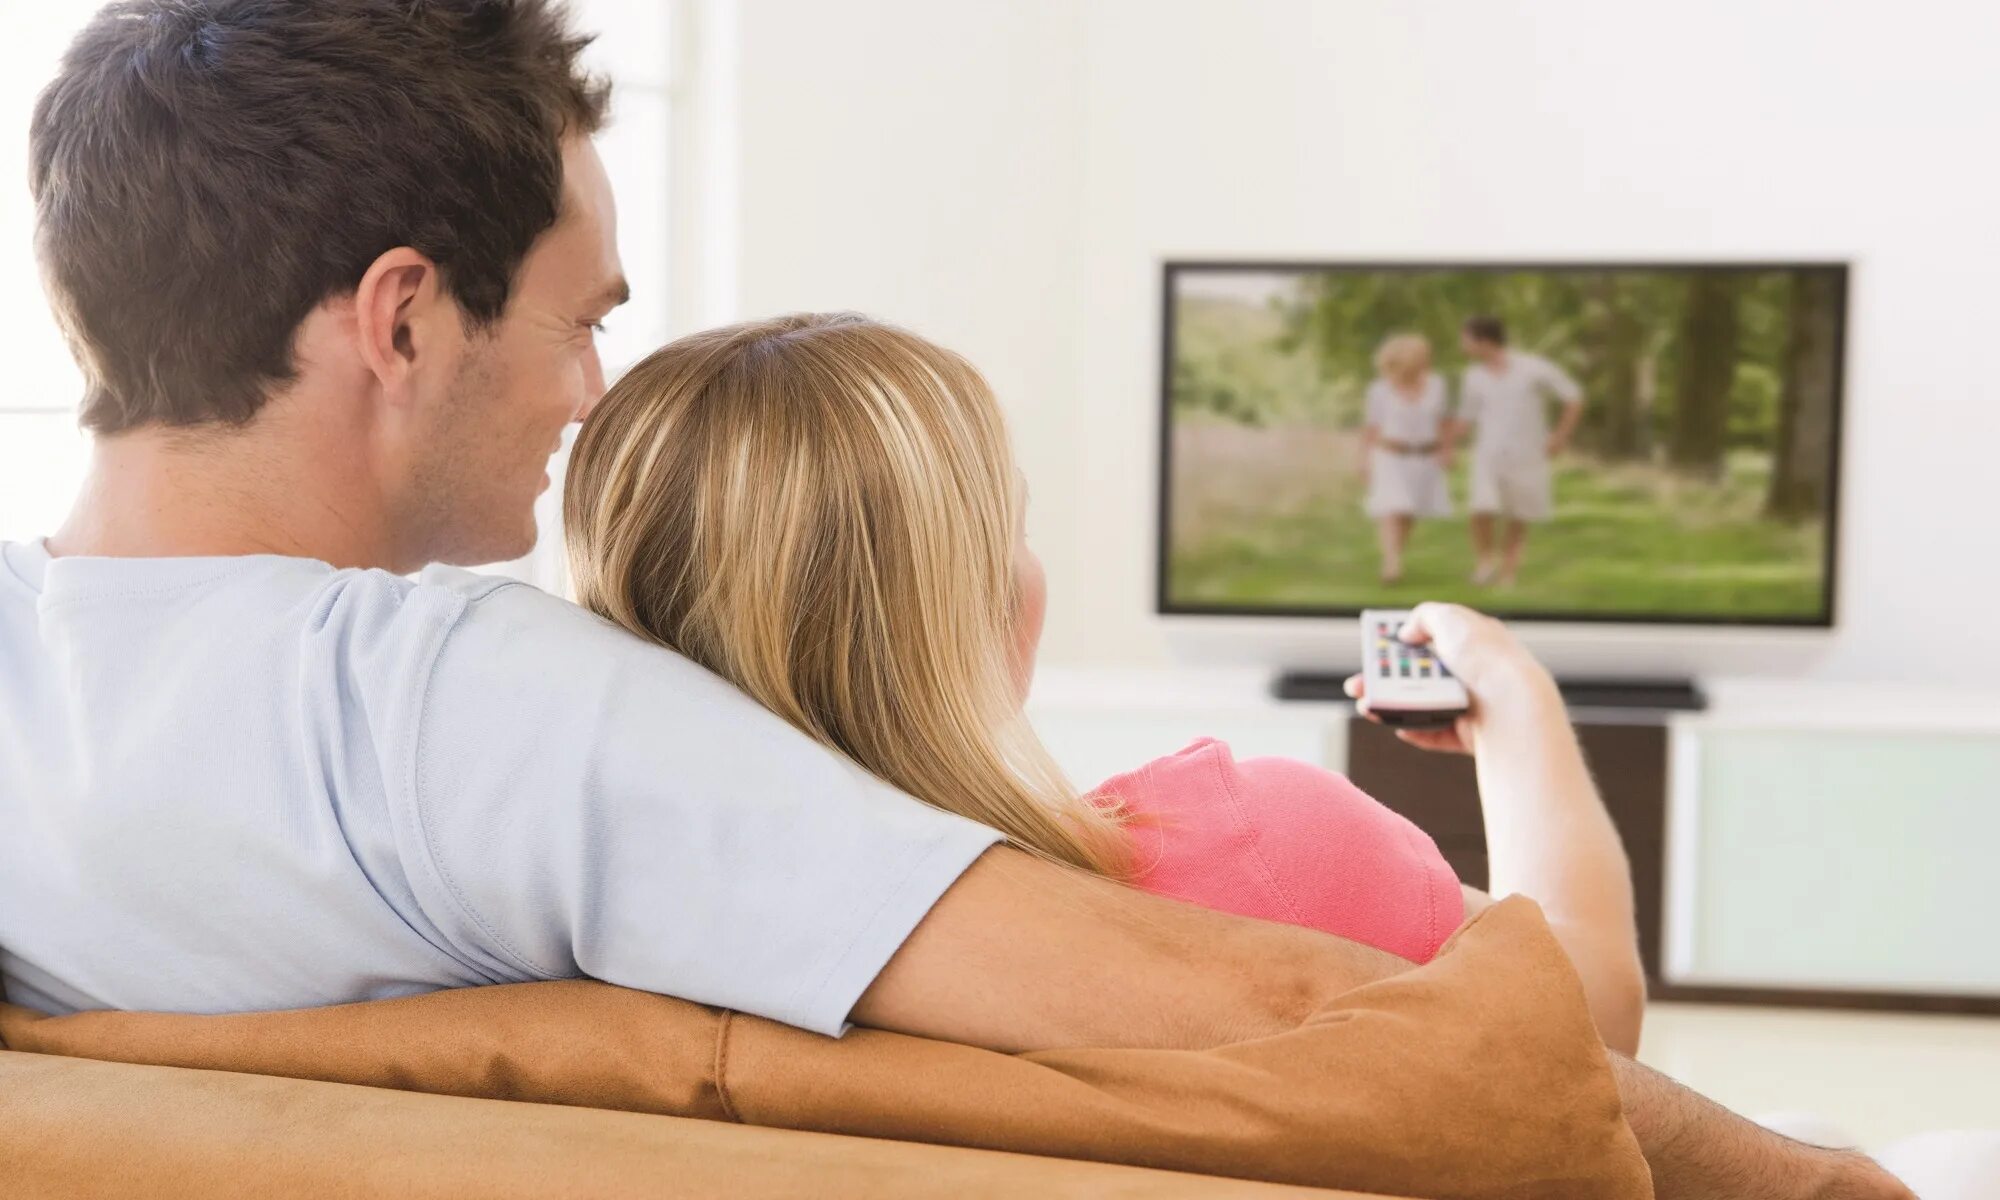 Человек телевизор. Человек перед телевизором. Пара перед телевизором. Пара на диване перед телевизором.